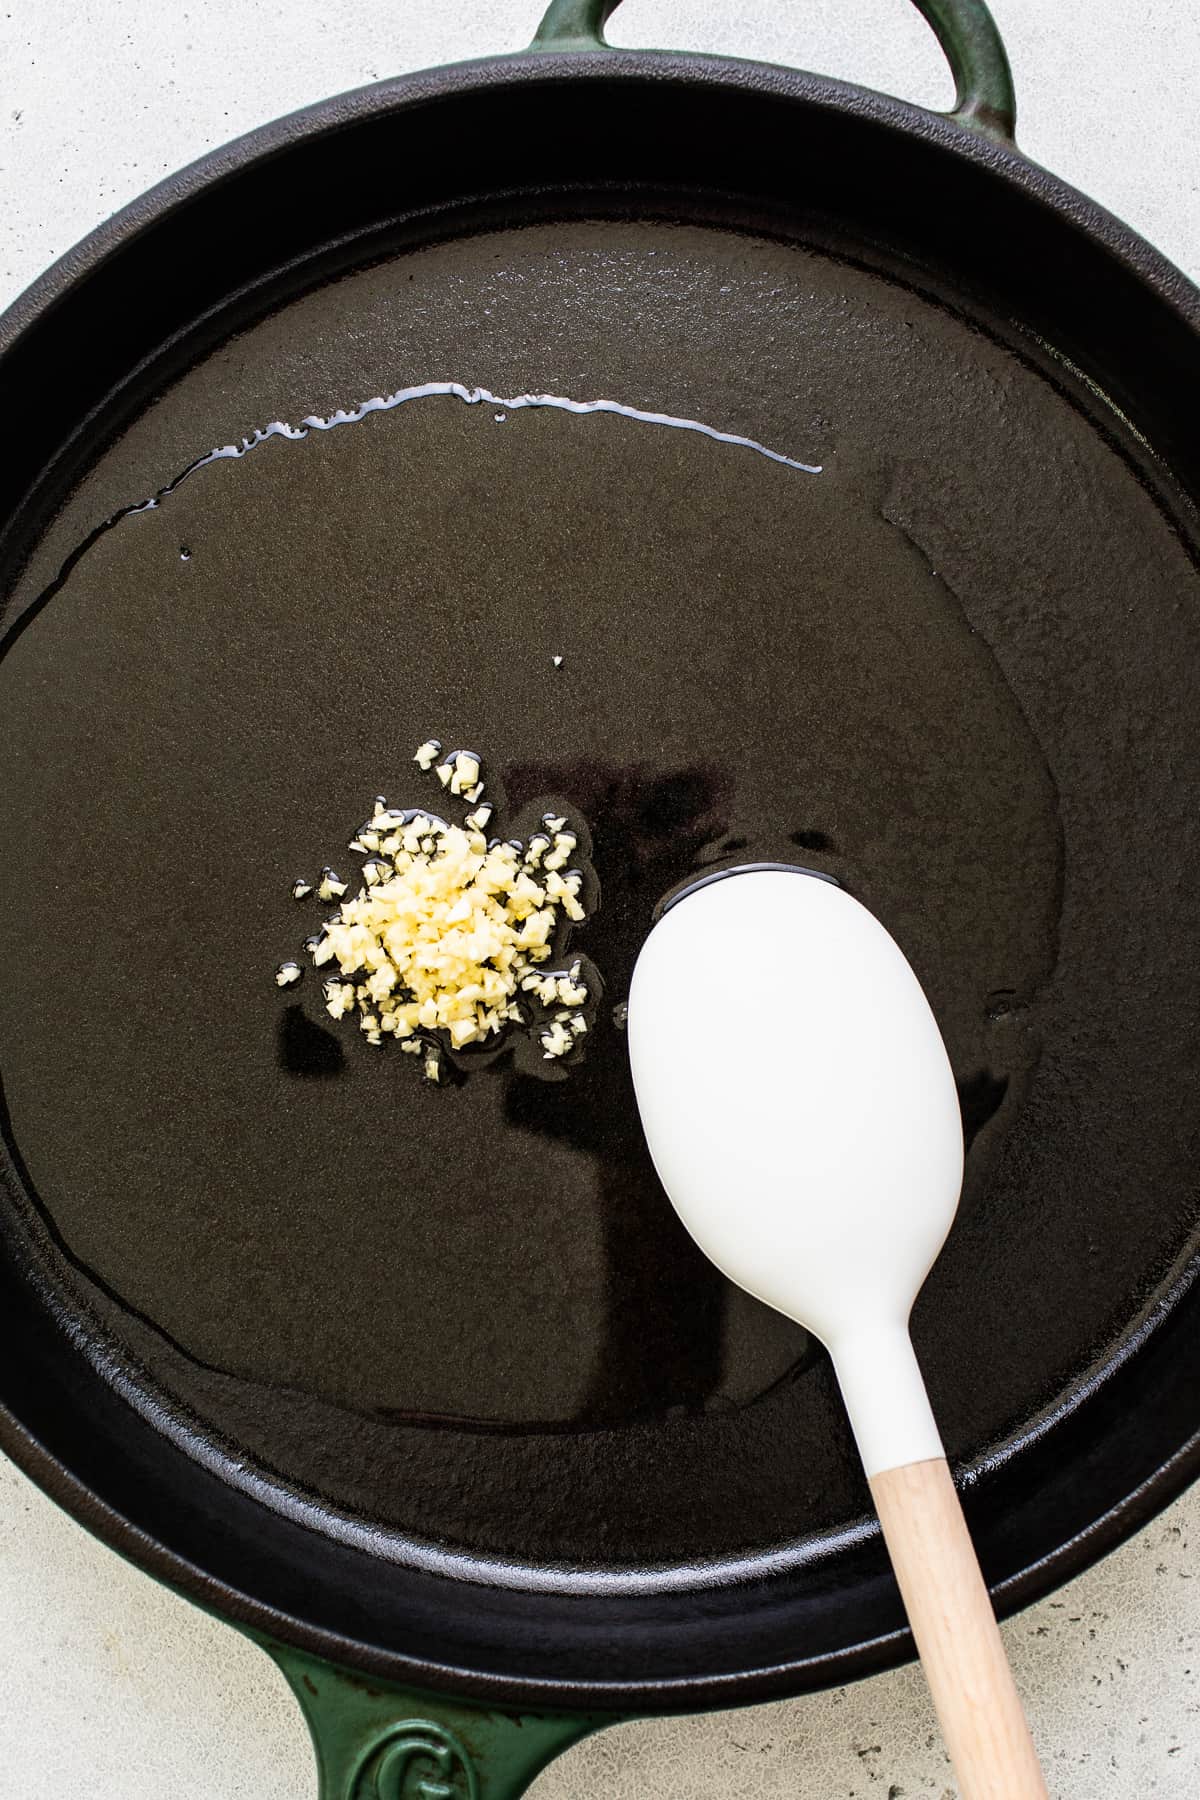 cooking garlic in the pan.